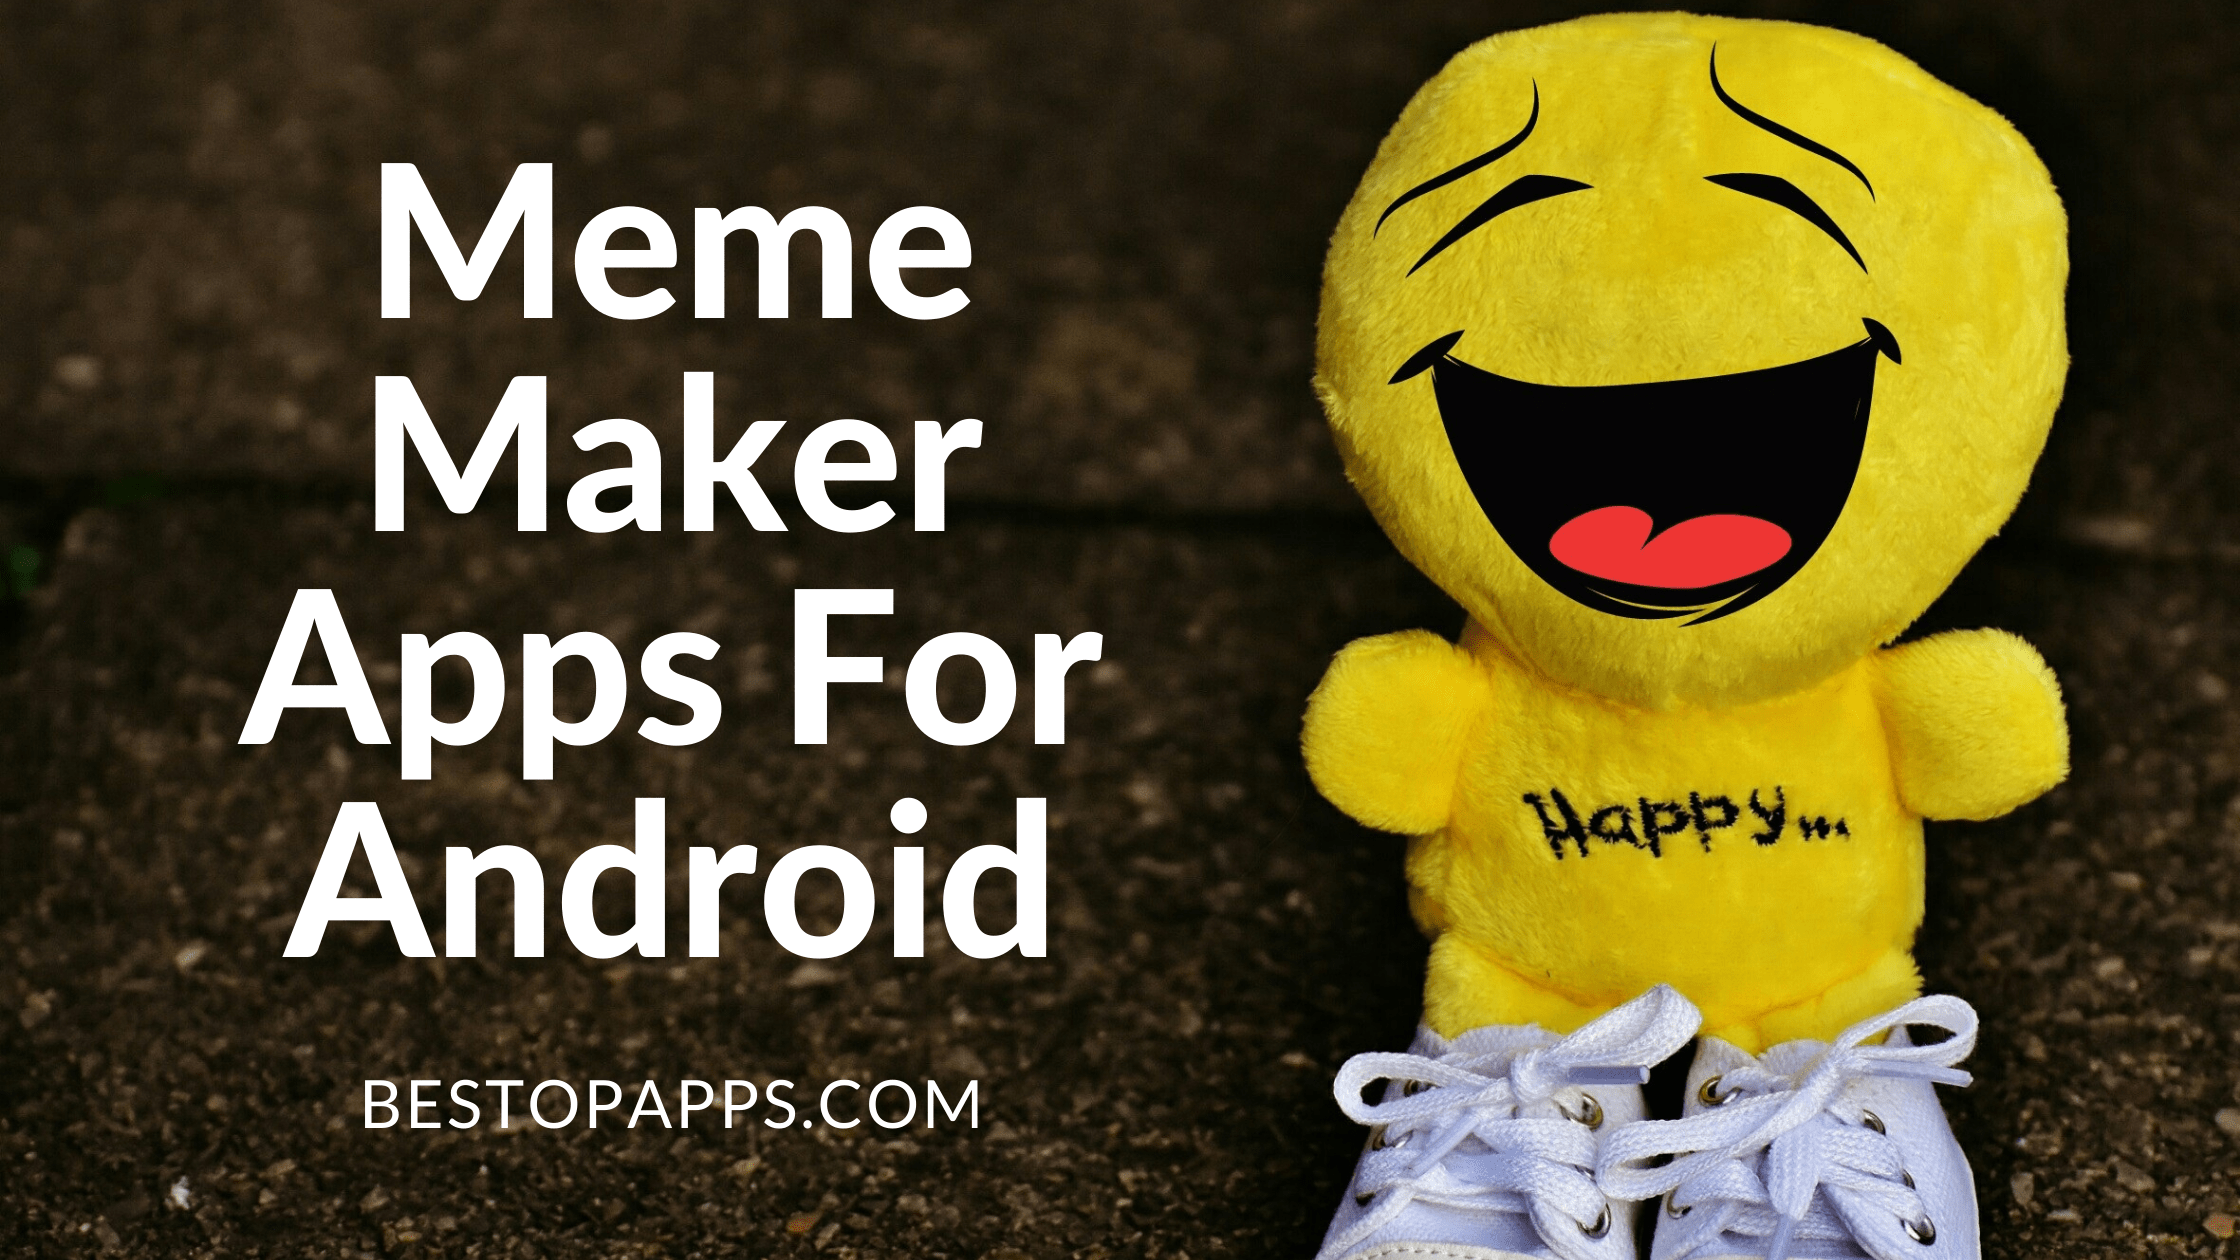 Meme Maker Apps For Android